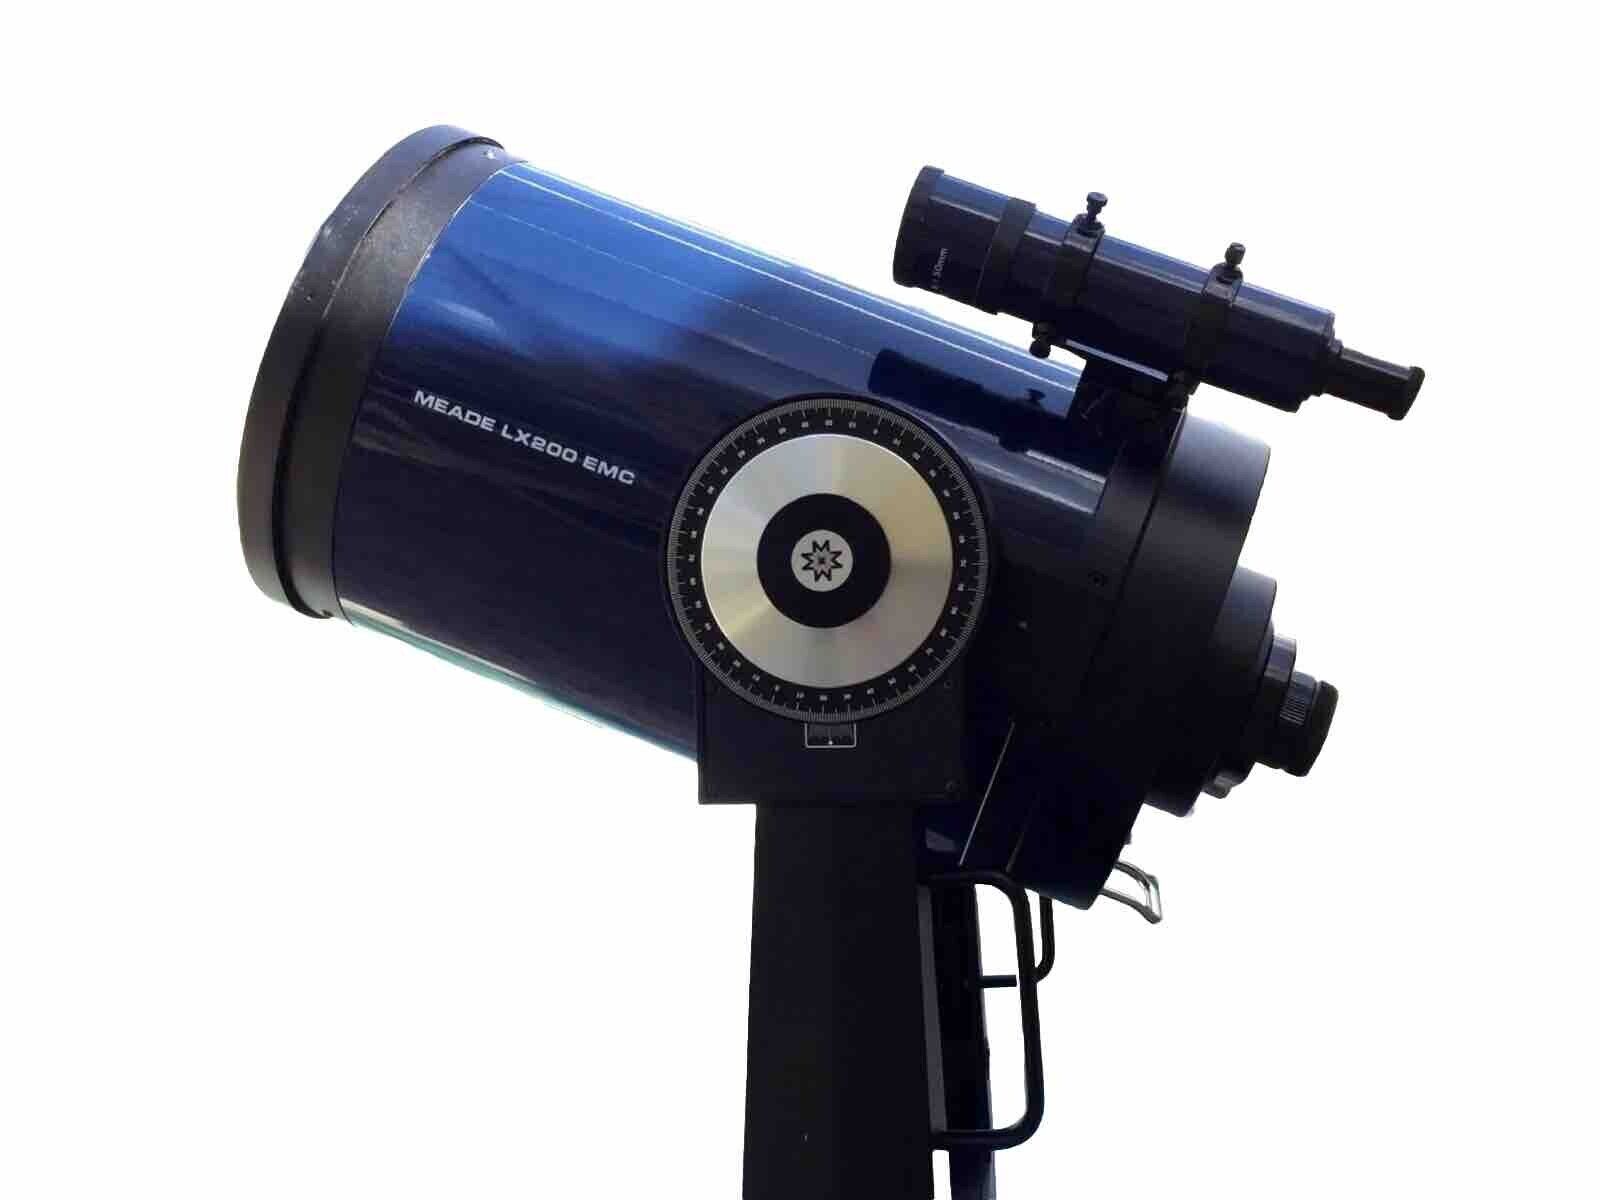 Meade LX200  EMC Telescope 10 inch, GDA upgraded to Audiostar control, GPS, WiFi